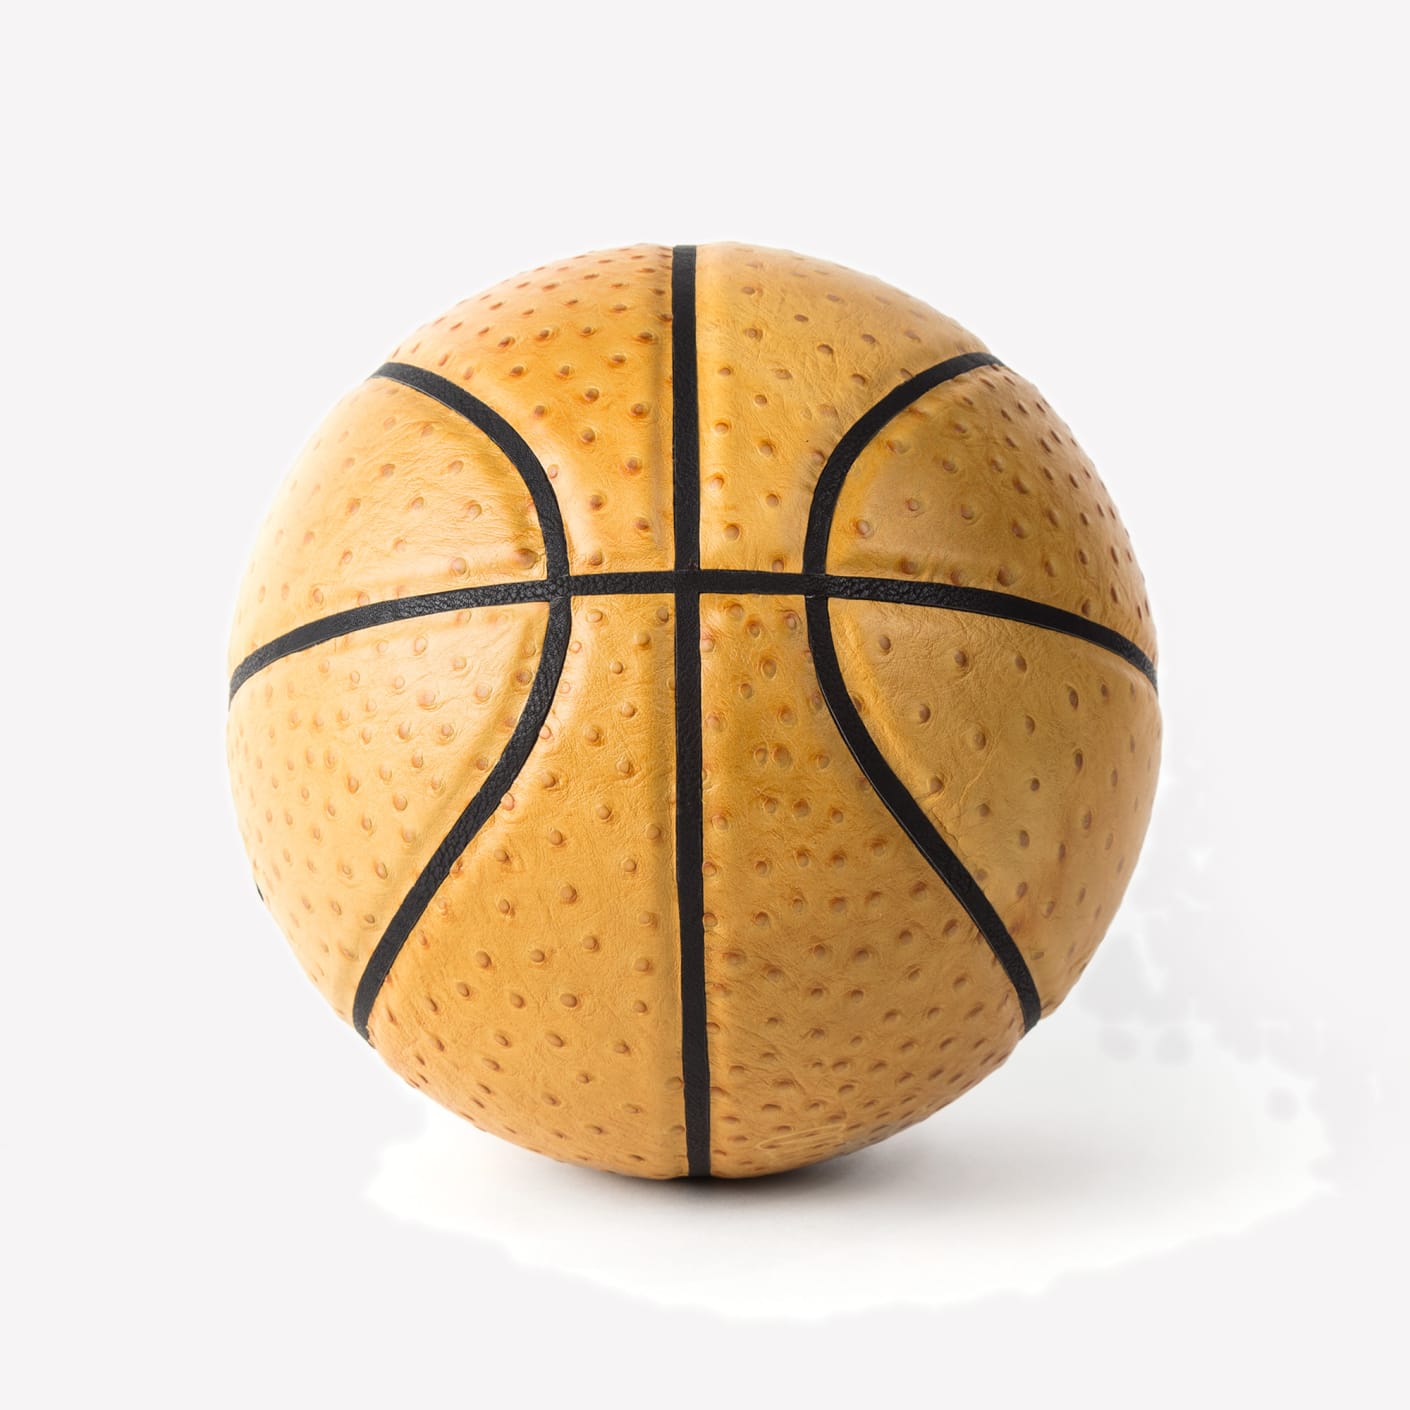 Unofish Creates a Line of Luxury Basketballs